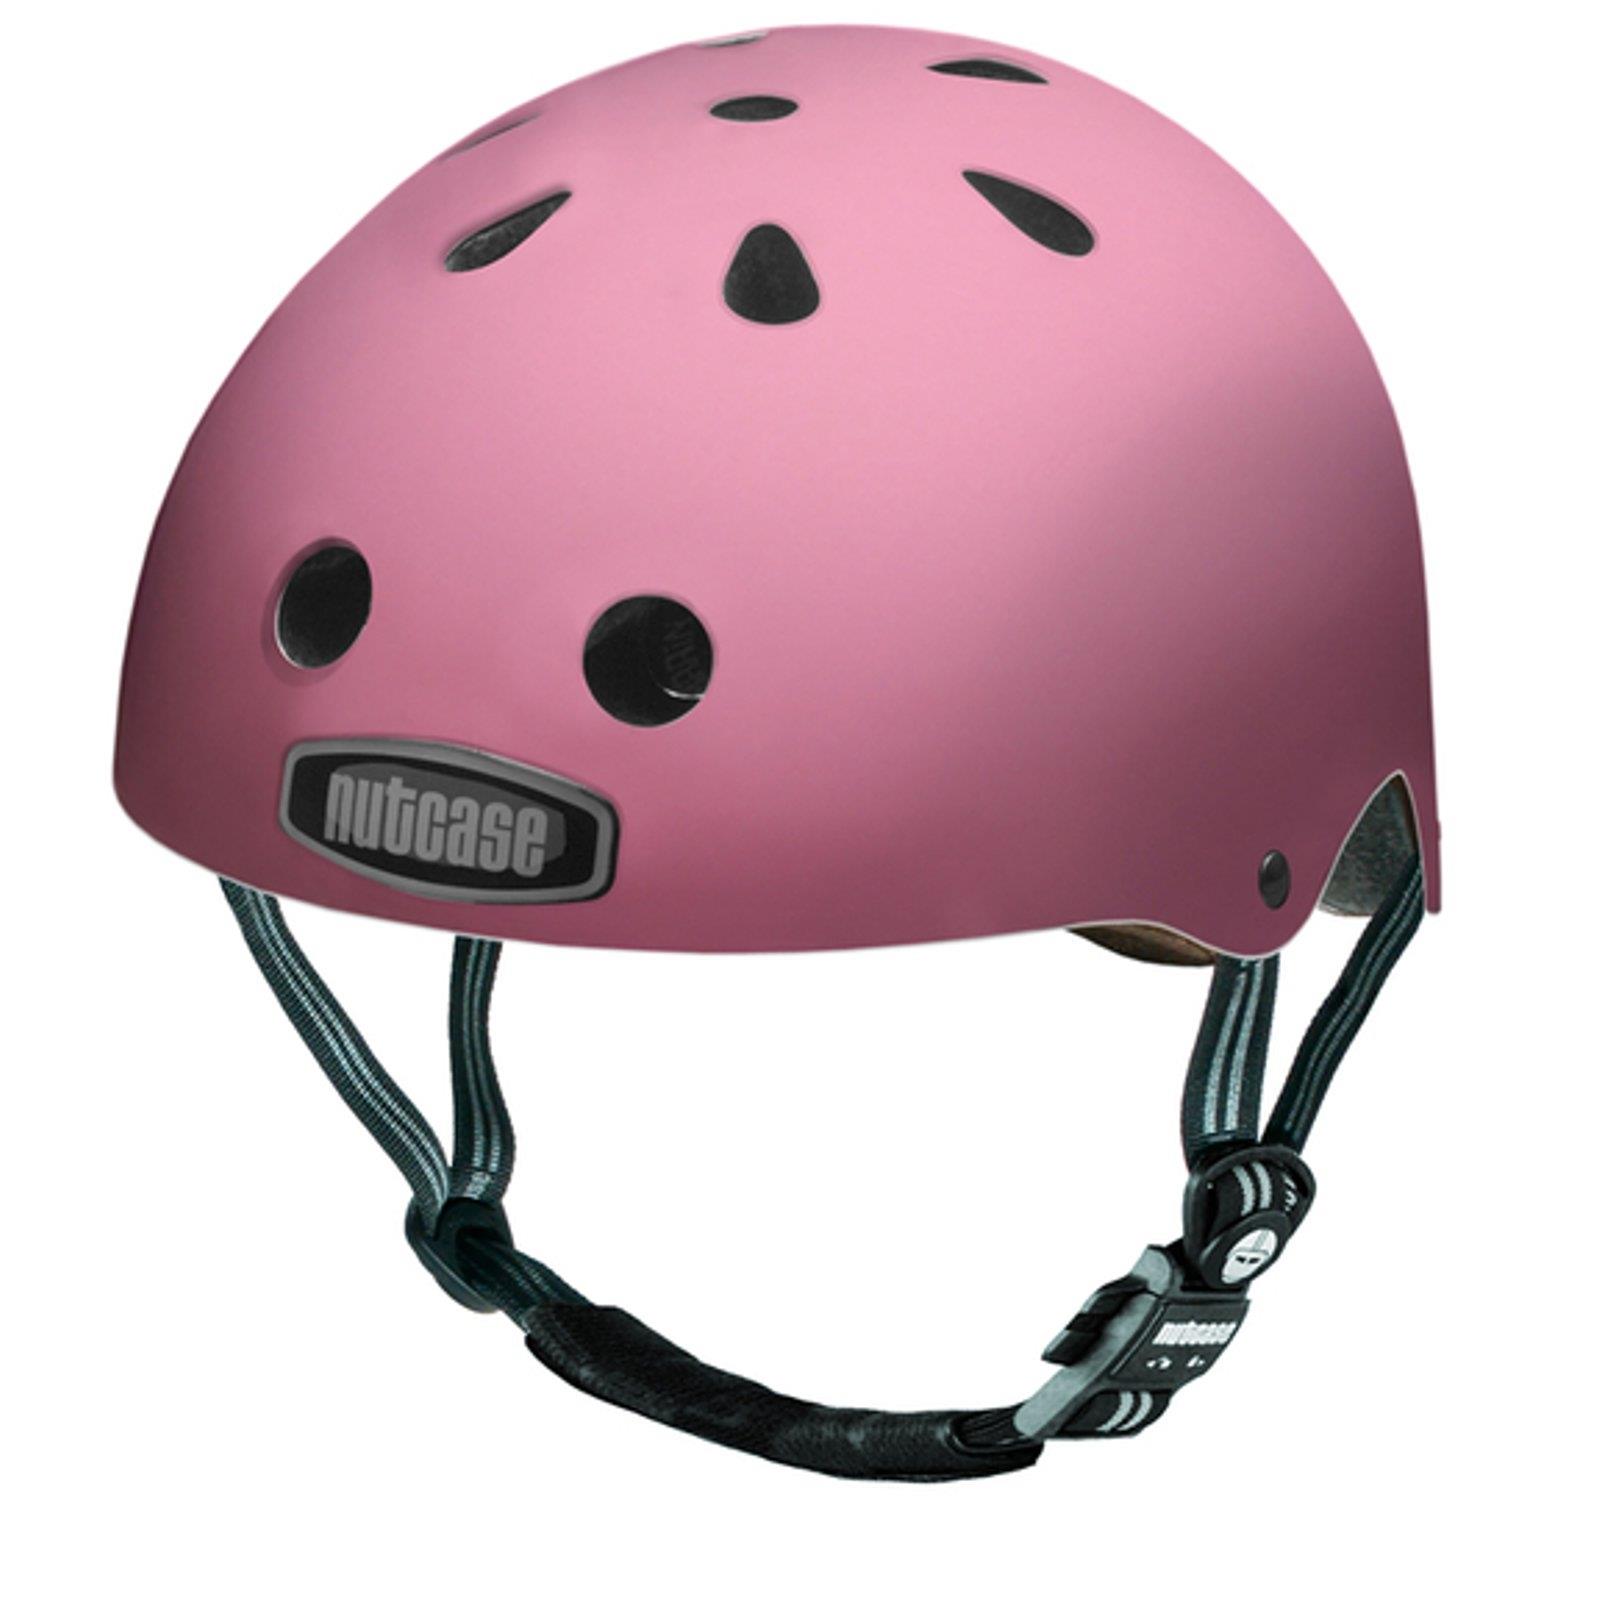 Nutcase Street Helm gen 2 Fahrrad Skate Inliner